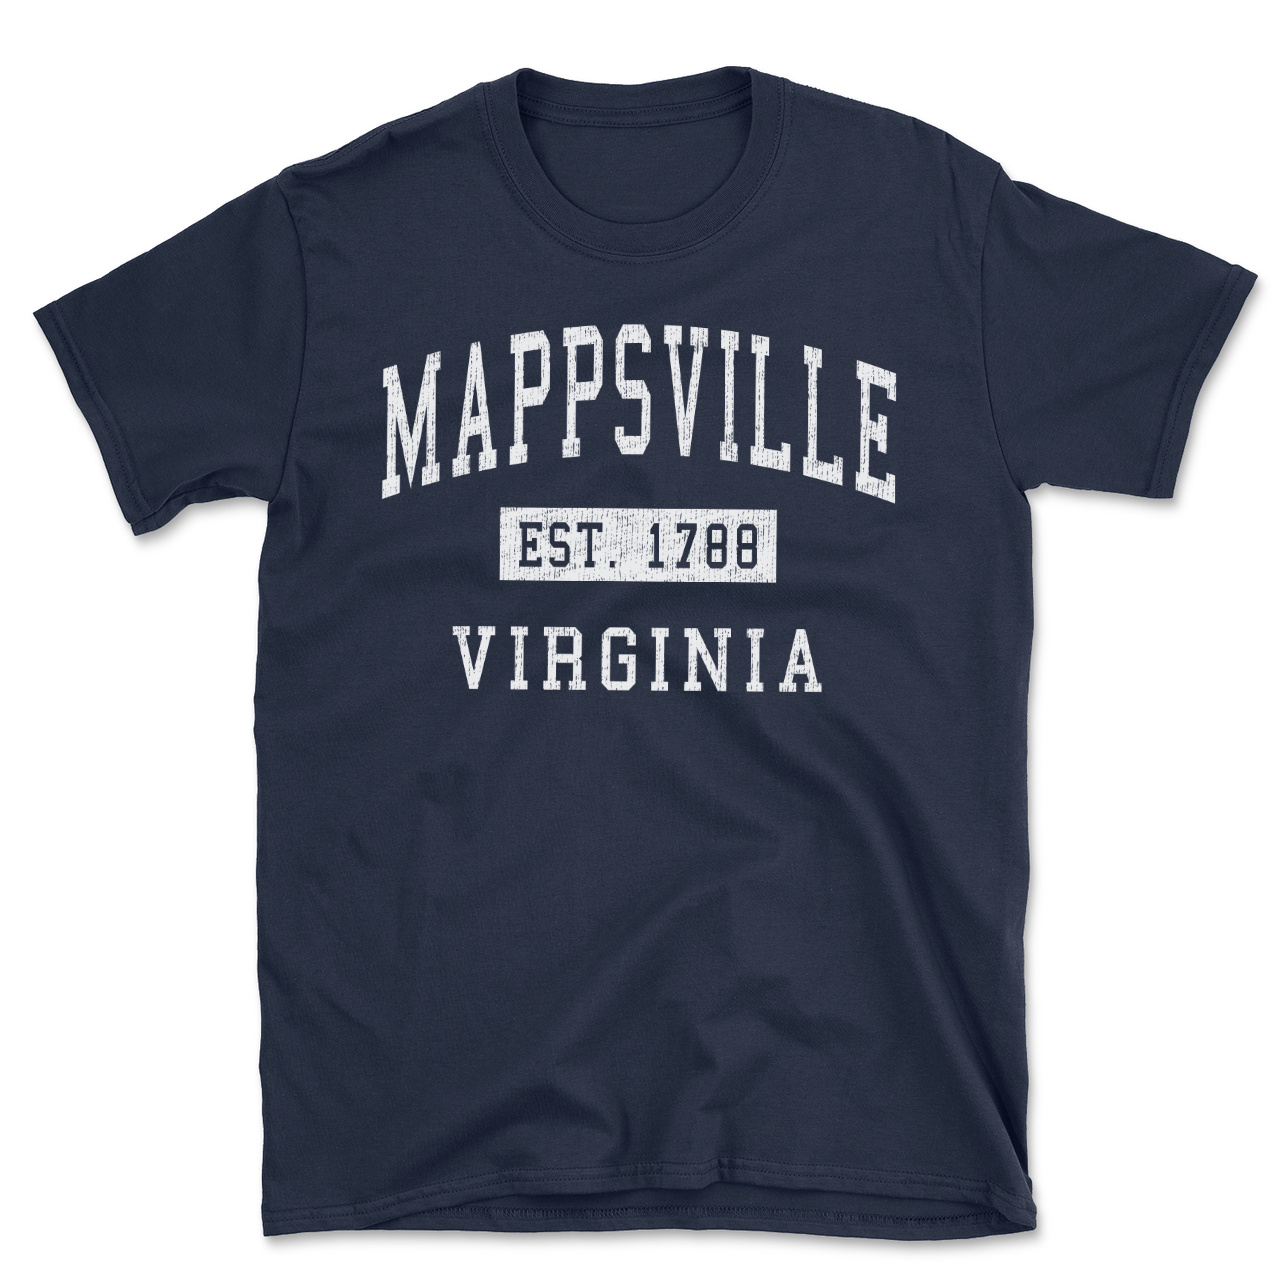 Mappsville Virginia Classic Established Men's Cotton T-Shirt - image 1 of 1